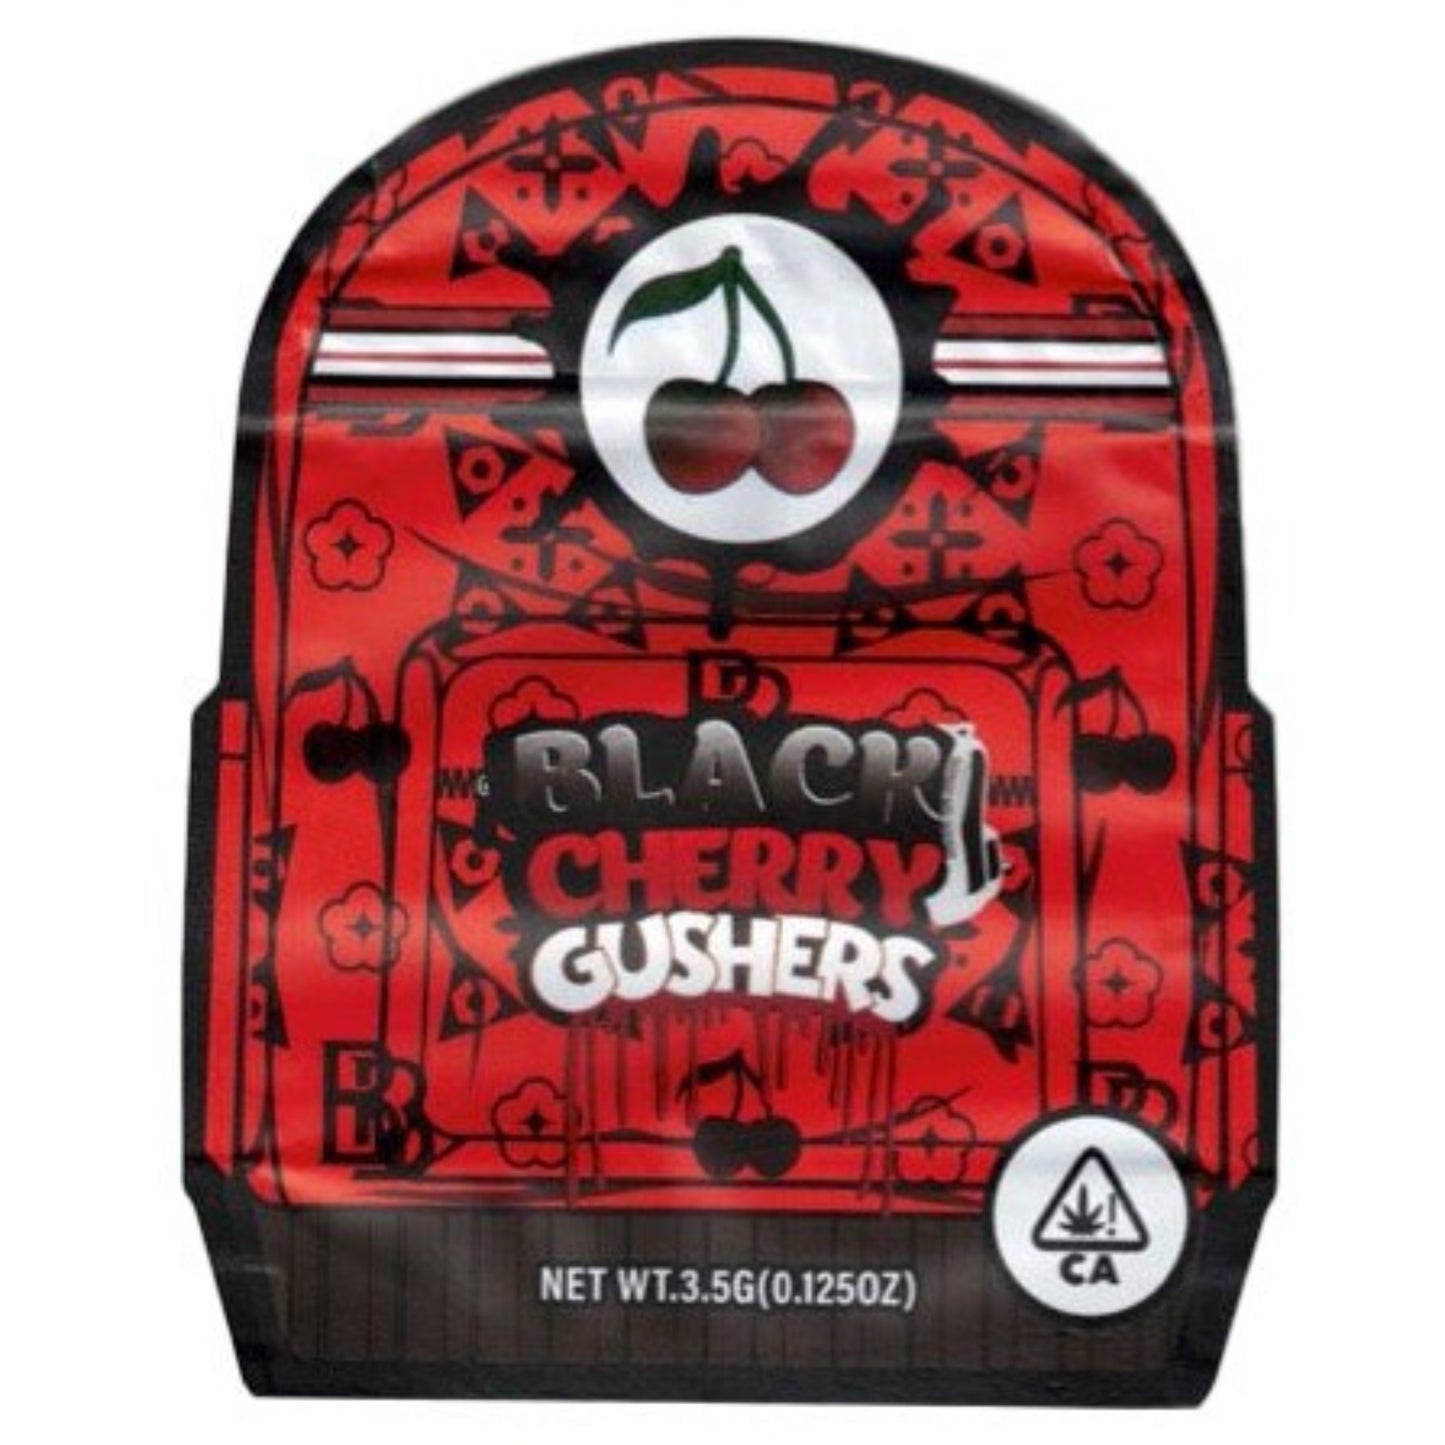 Black Cherry Gushers 3.5G Mylar Bags